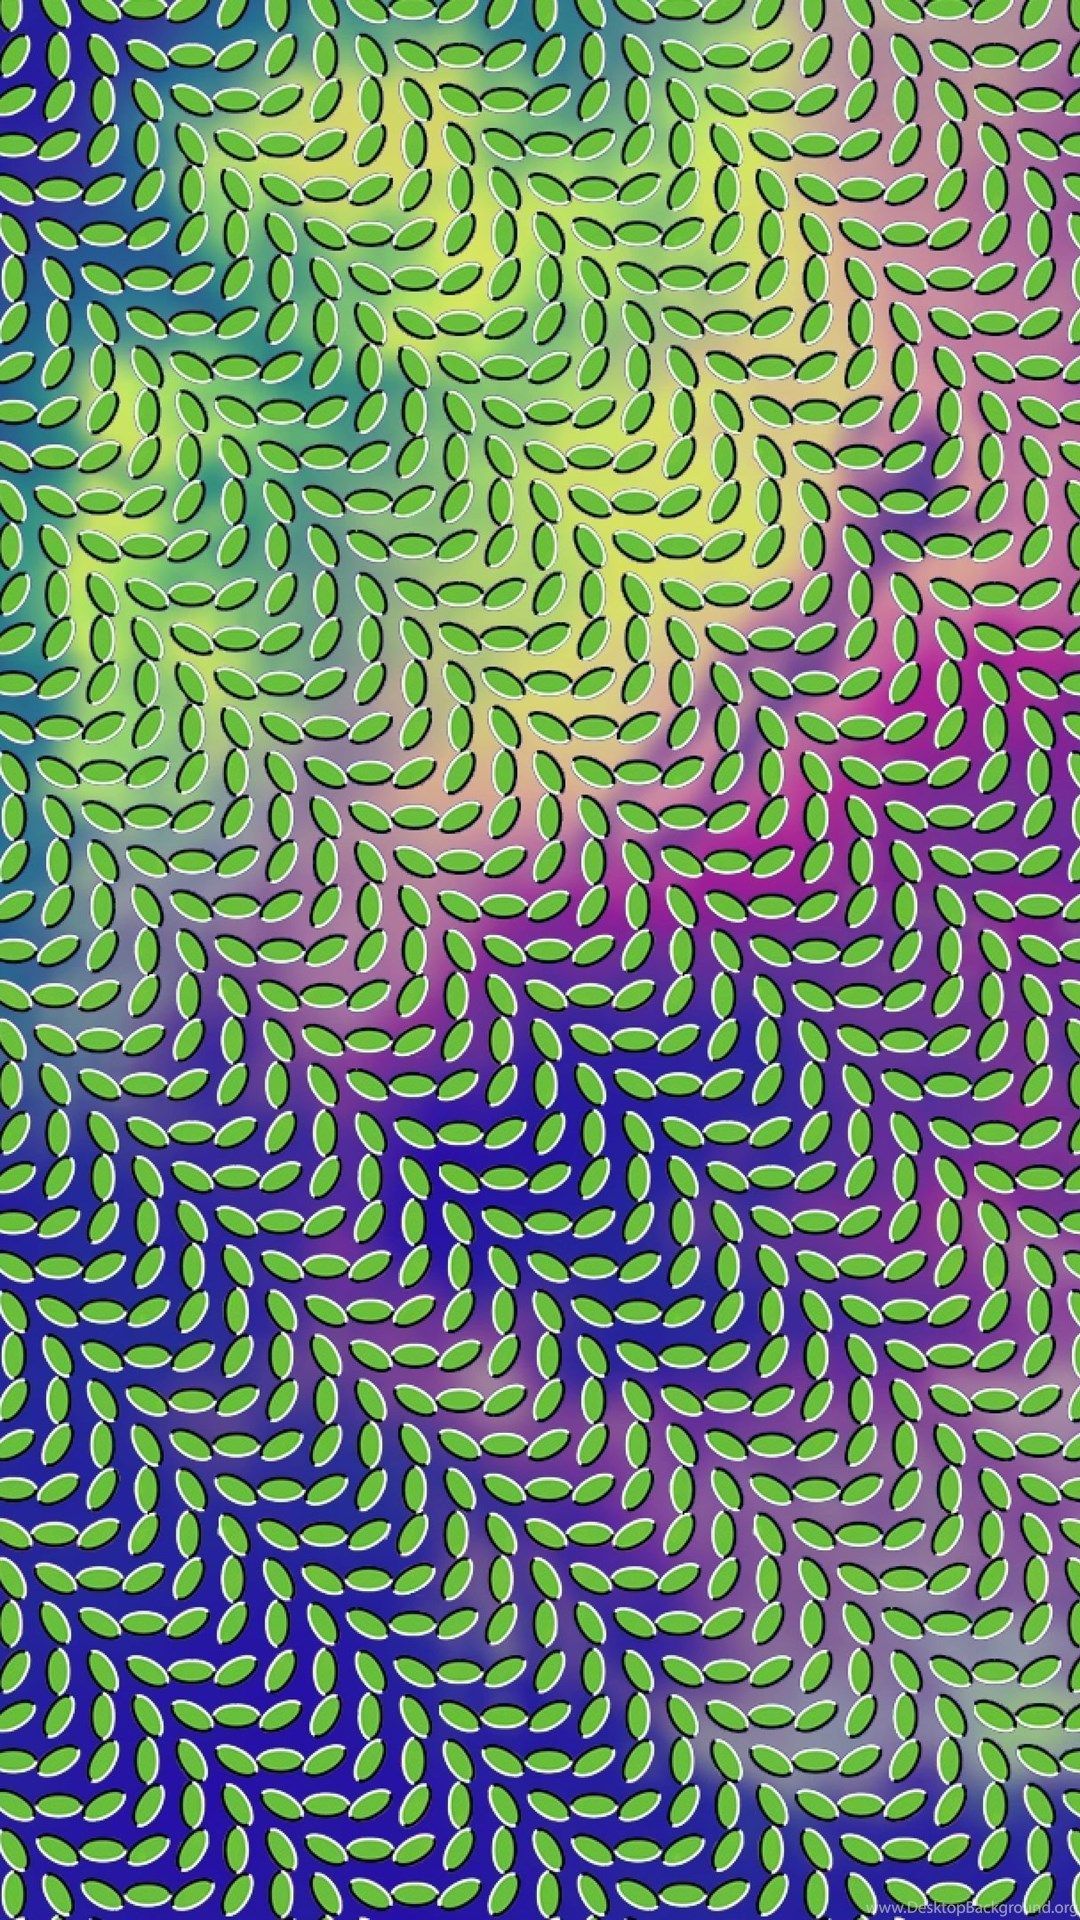 3D Illusion iPhone Wallpaper: Image